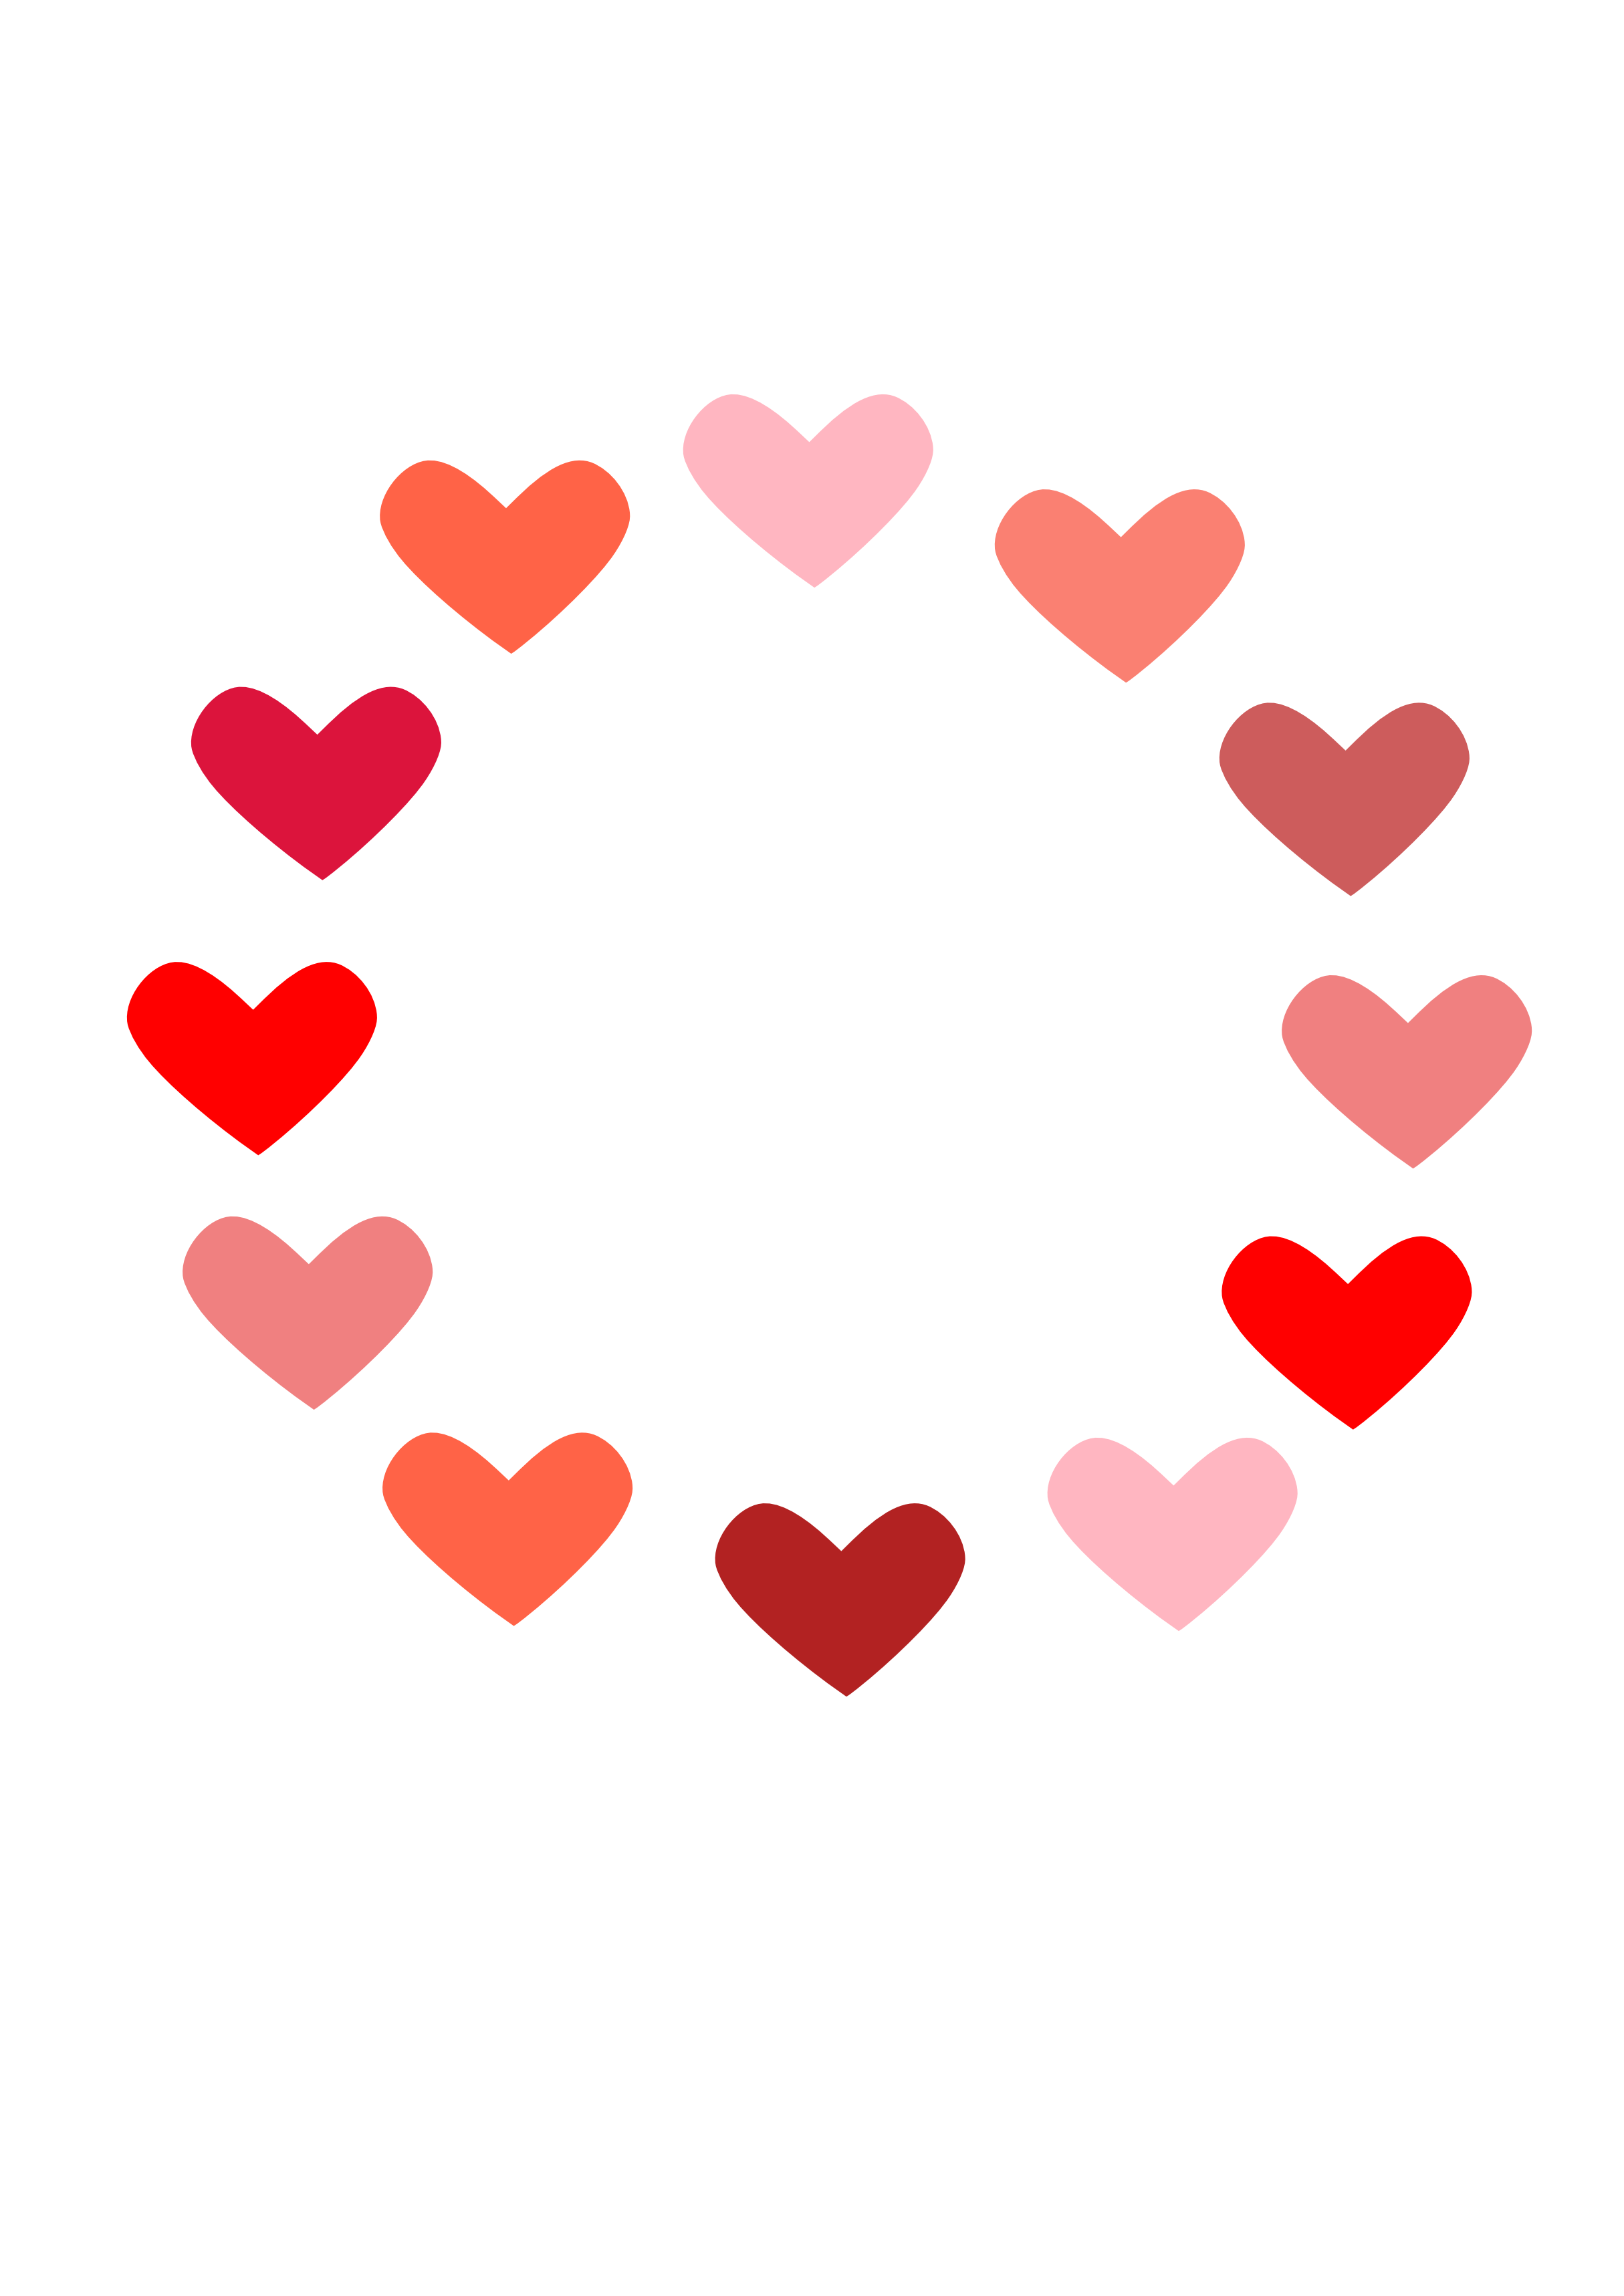 circled in love heart valentine SVG